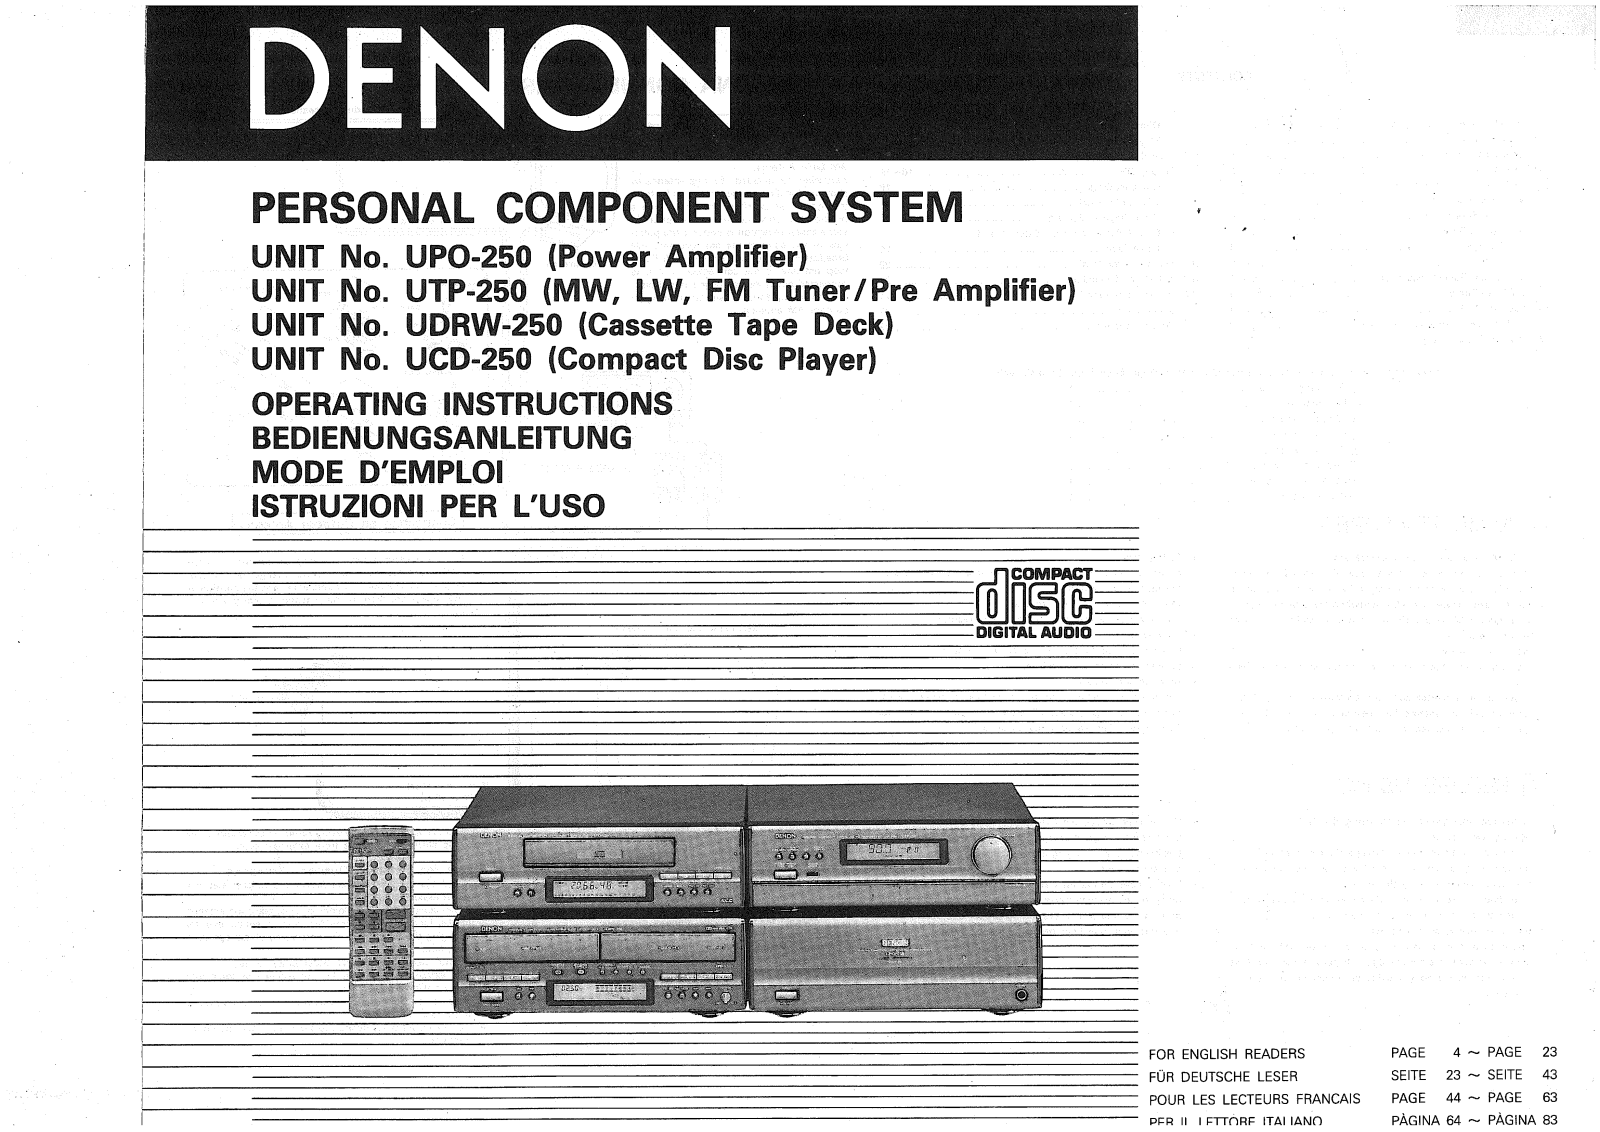 Denon UPO-250, UTP-250, UDRW-250, UCD-250 Owner's Manual